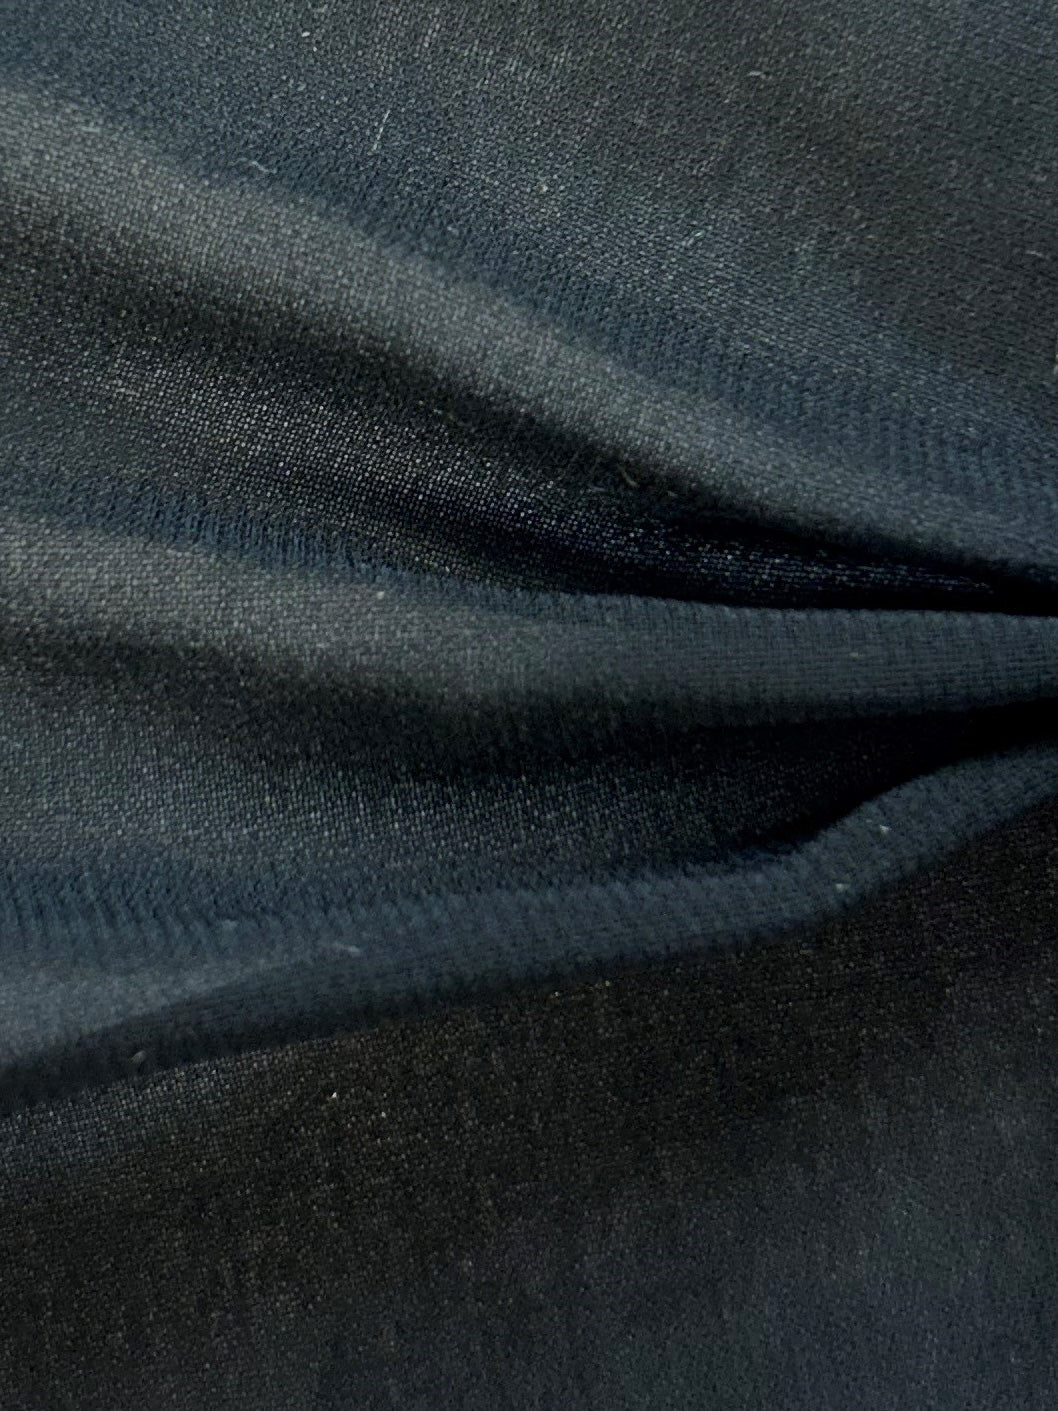 Schwarzer Polyester-Chiffon-Stoff – Serendipity